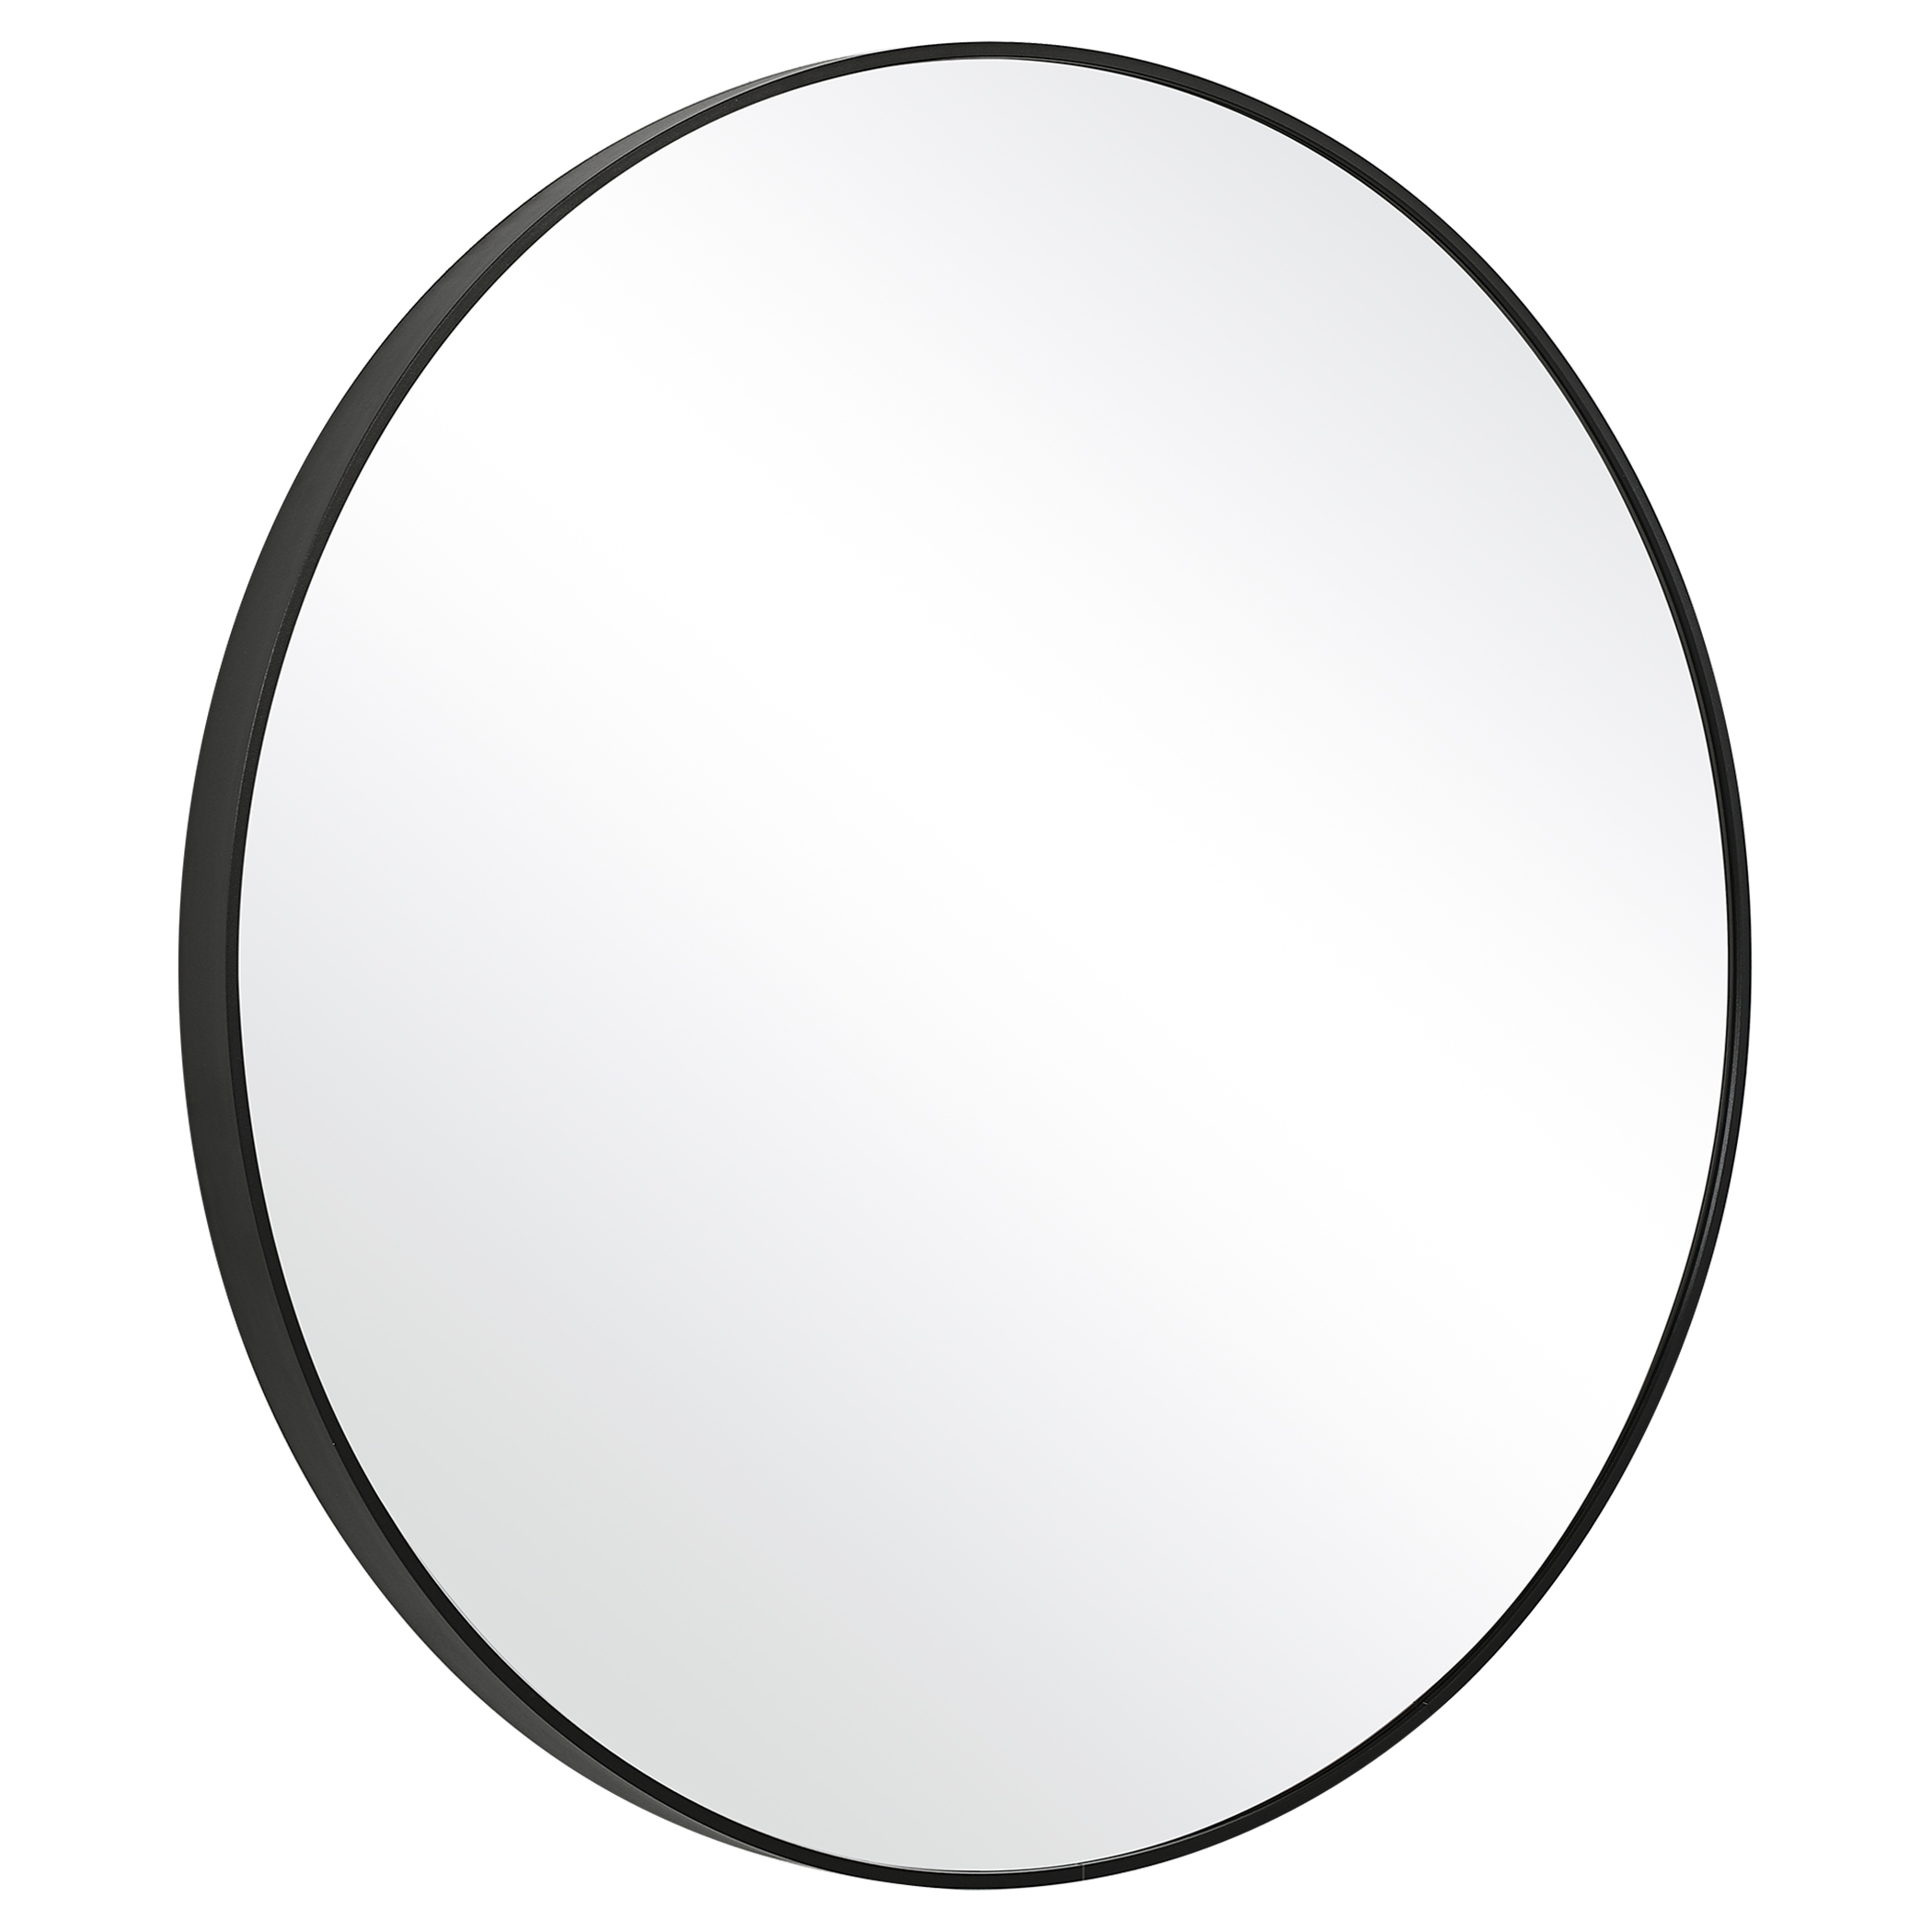 Simple Thin Metal Frame Round Mirror, 33" - Image 1